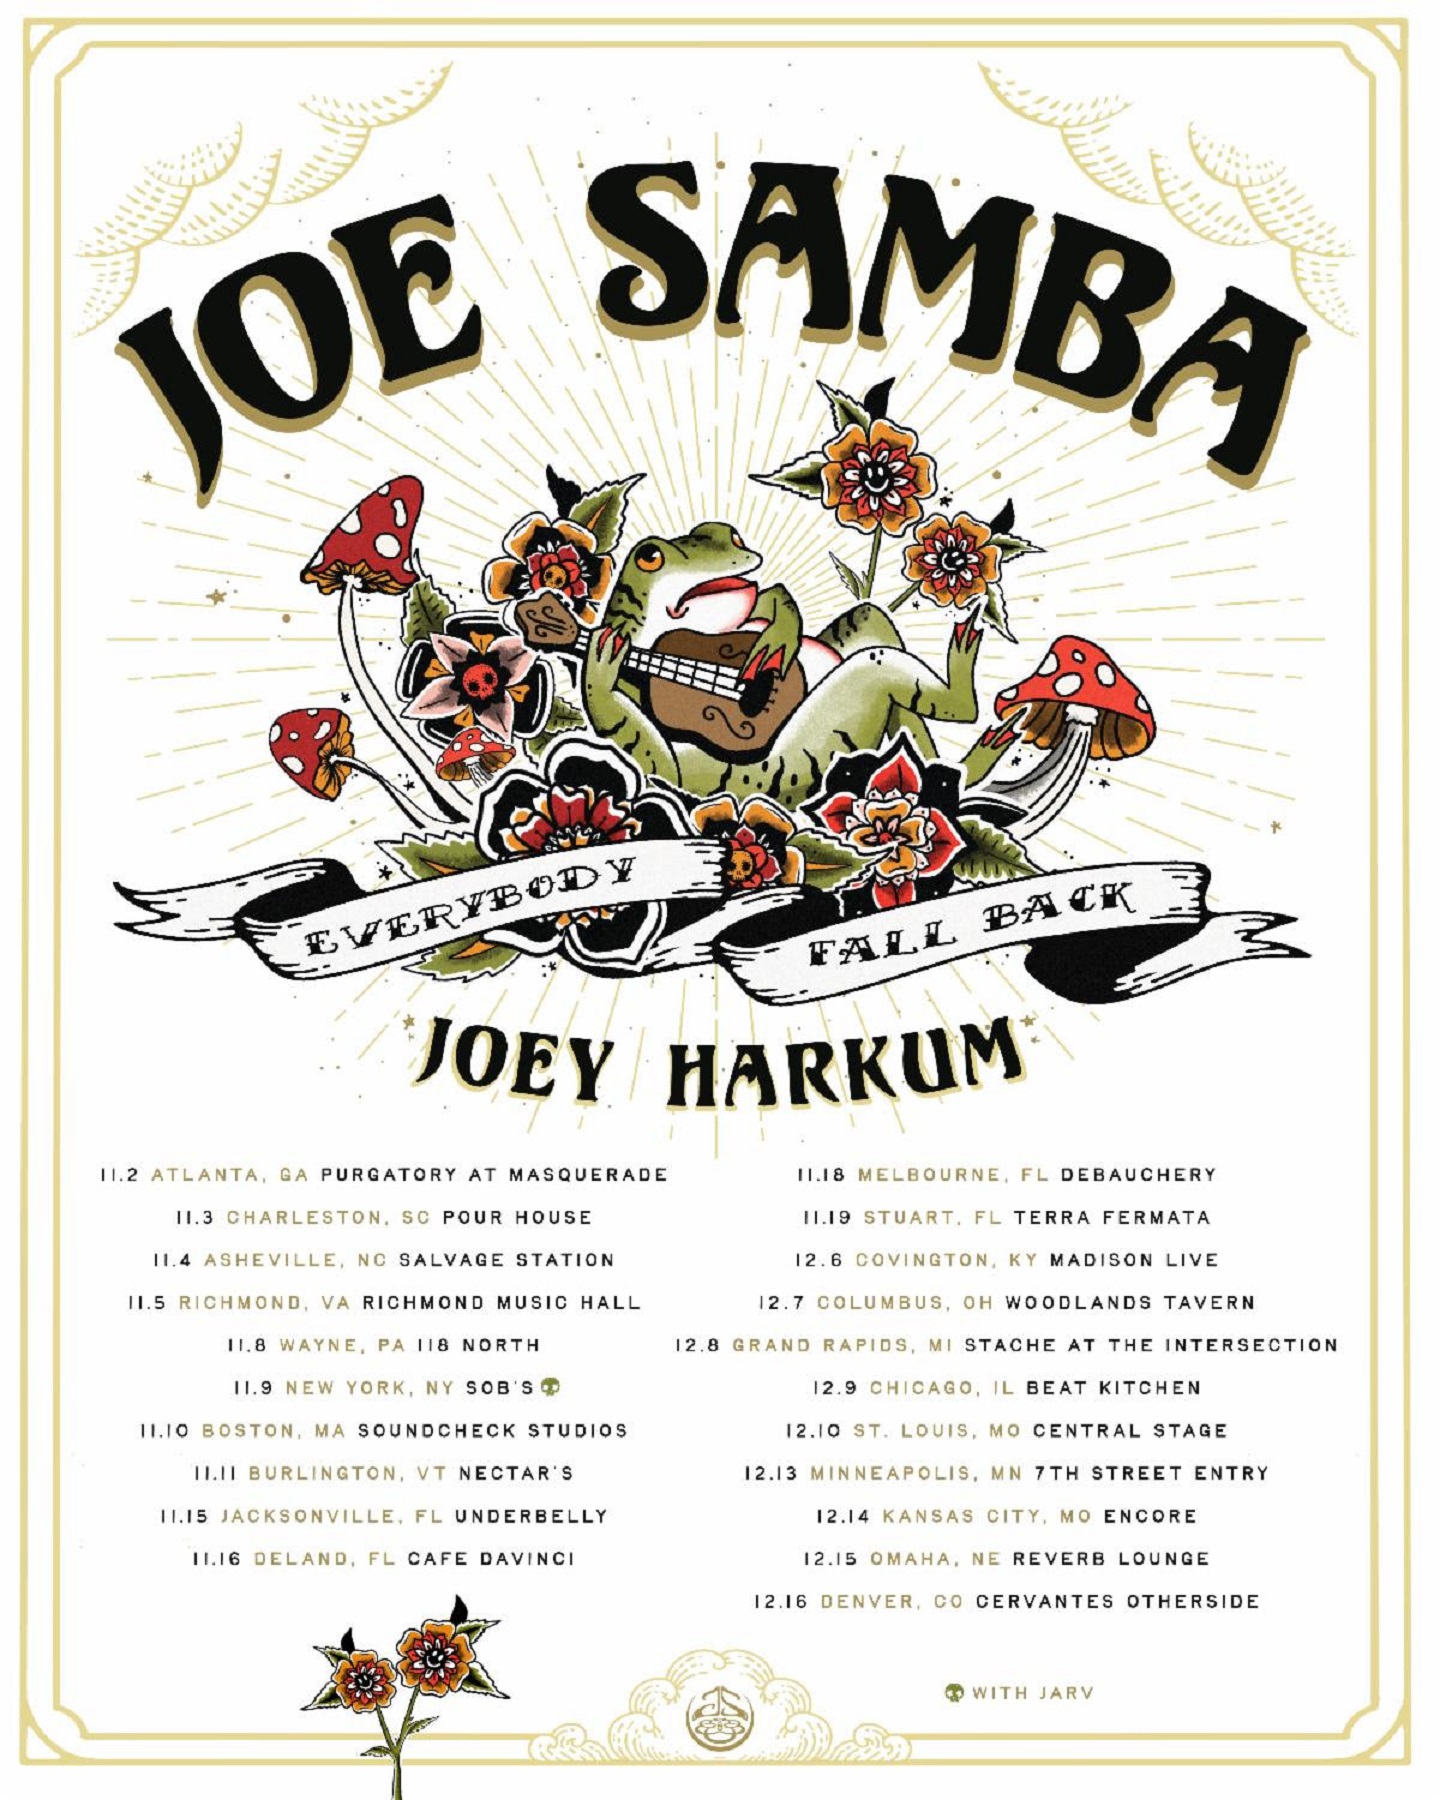 Joe Samba Announces First-Ever U.S. Headlining Tour